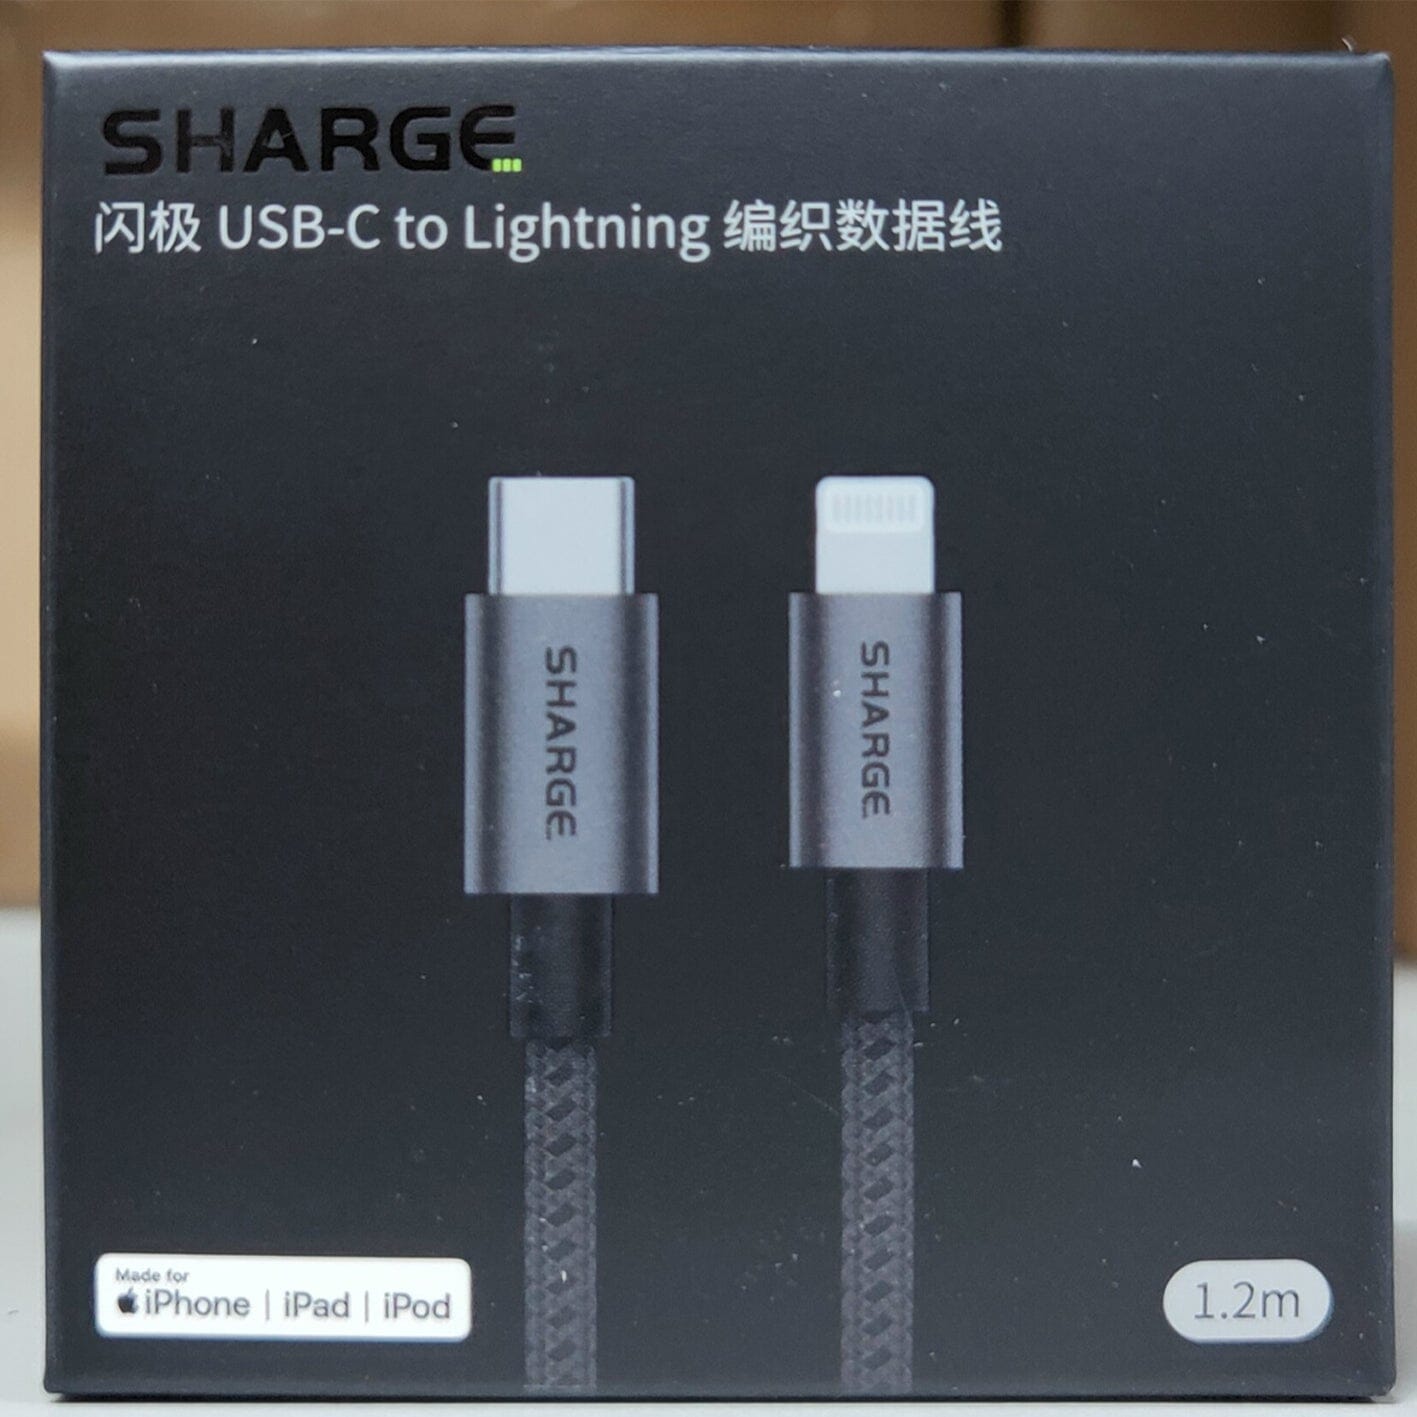 Shargeek SL101 MFI USB-C to Lightning Braided Cable 1.2m SHARGEEK 